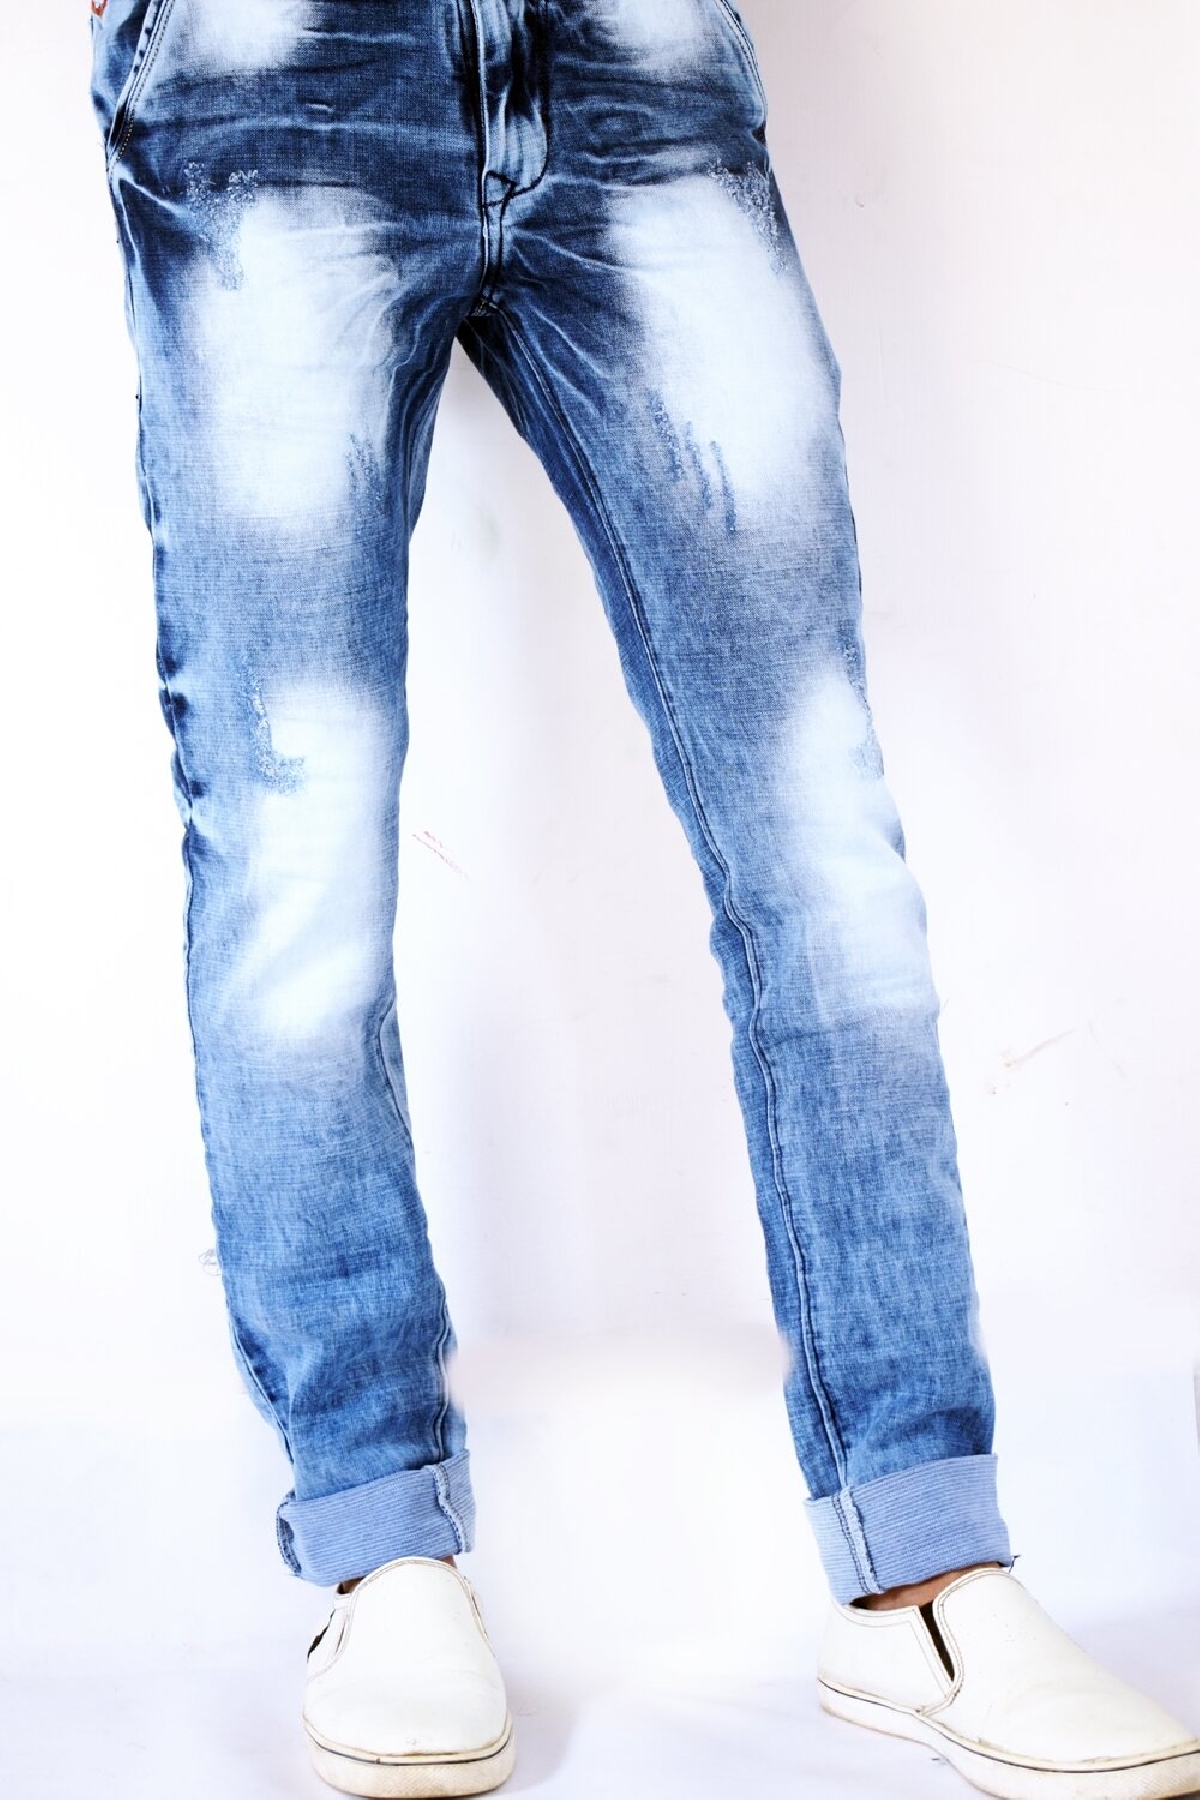 sparky jeans